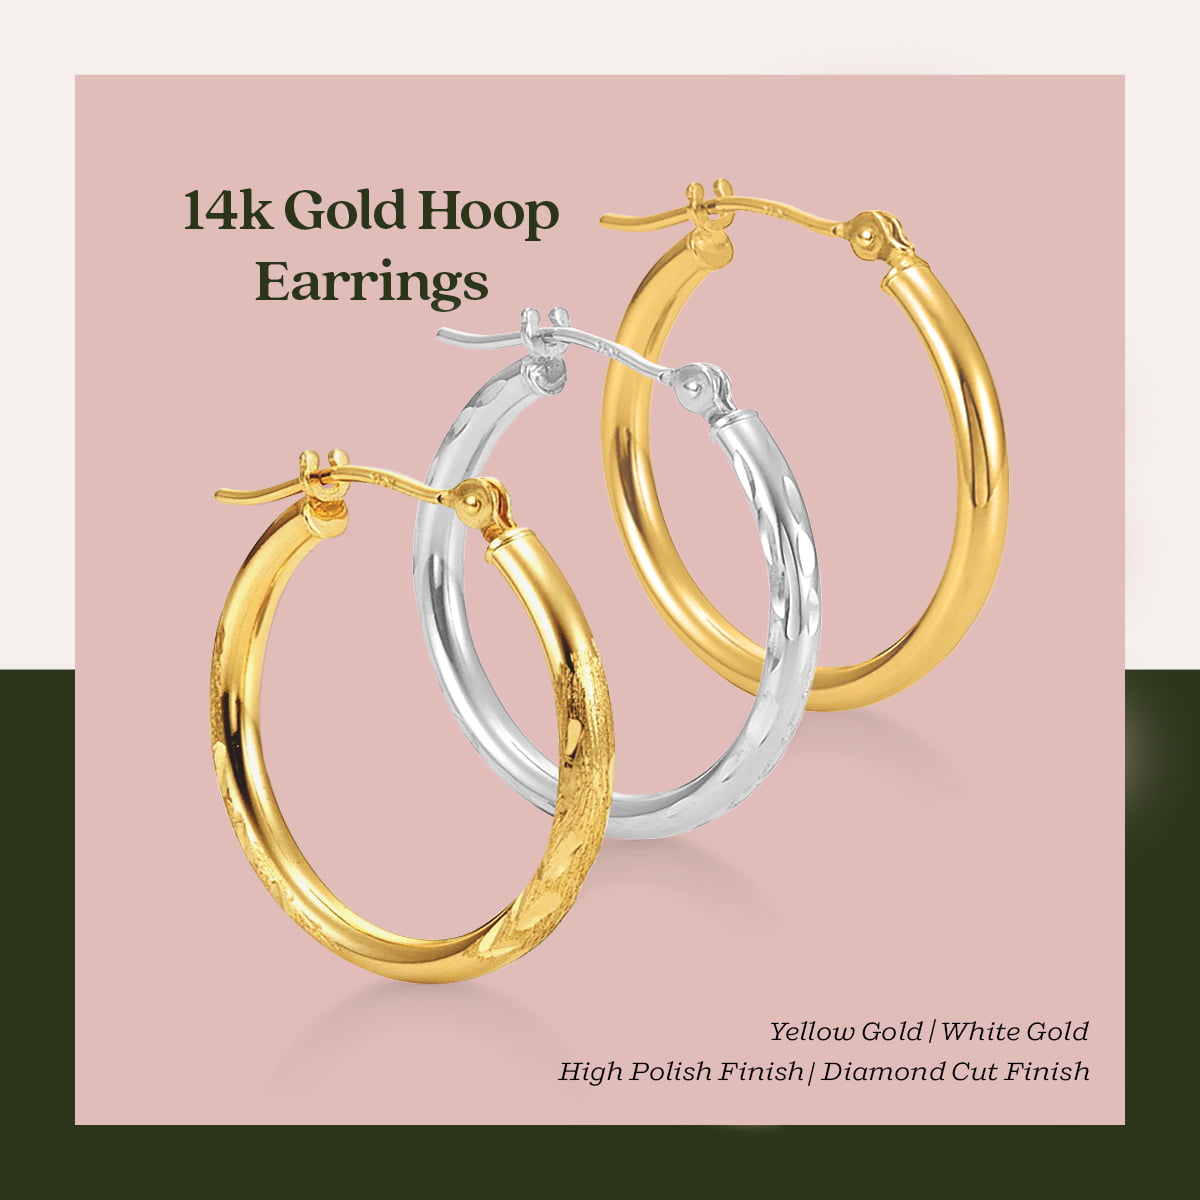 23 x 23 mm GoldenMine 14k Yellow Gold 5mm Basic Hollow Hoop Earrings 